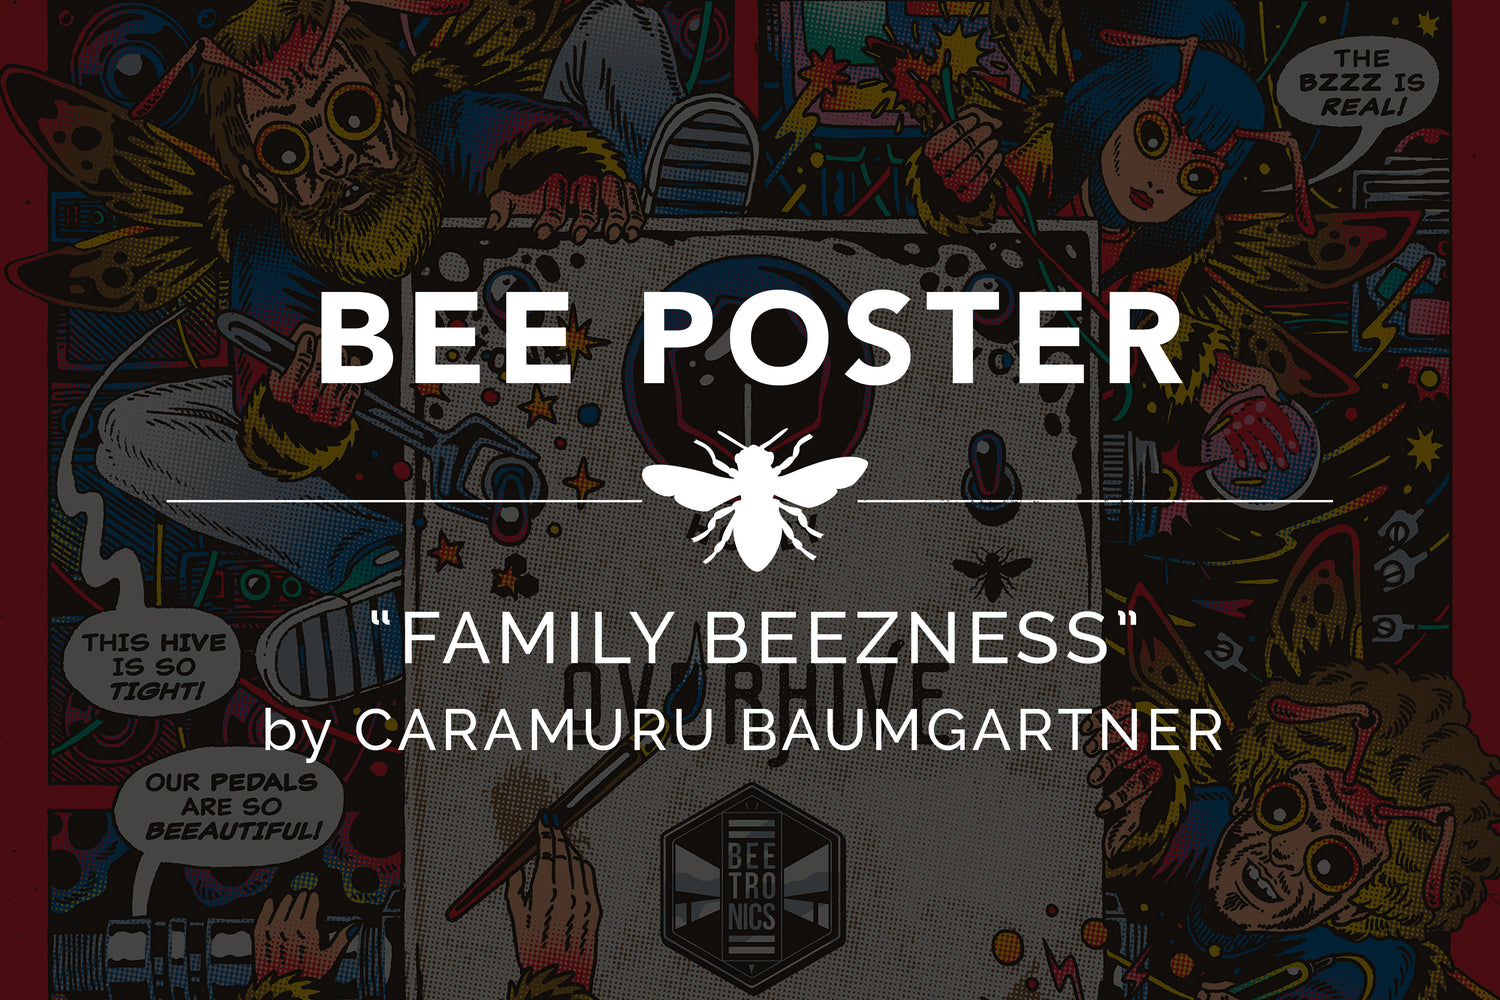 BEE POSTER - "Family Beezness" by Caramuru Baumgartner